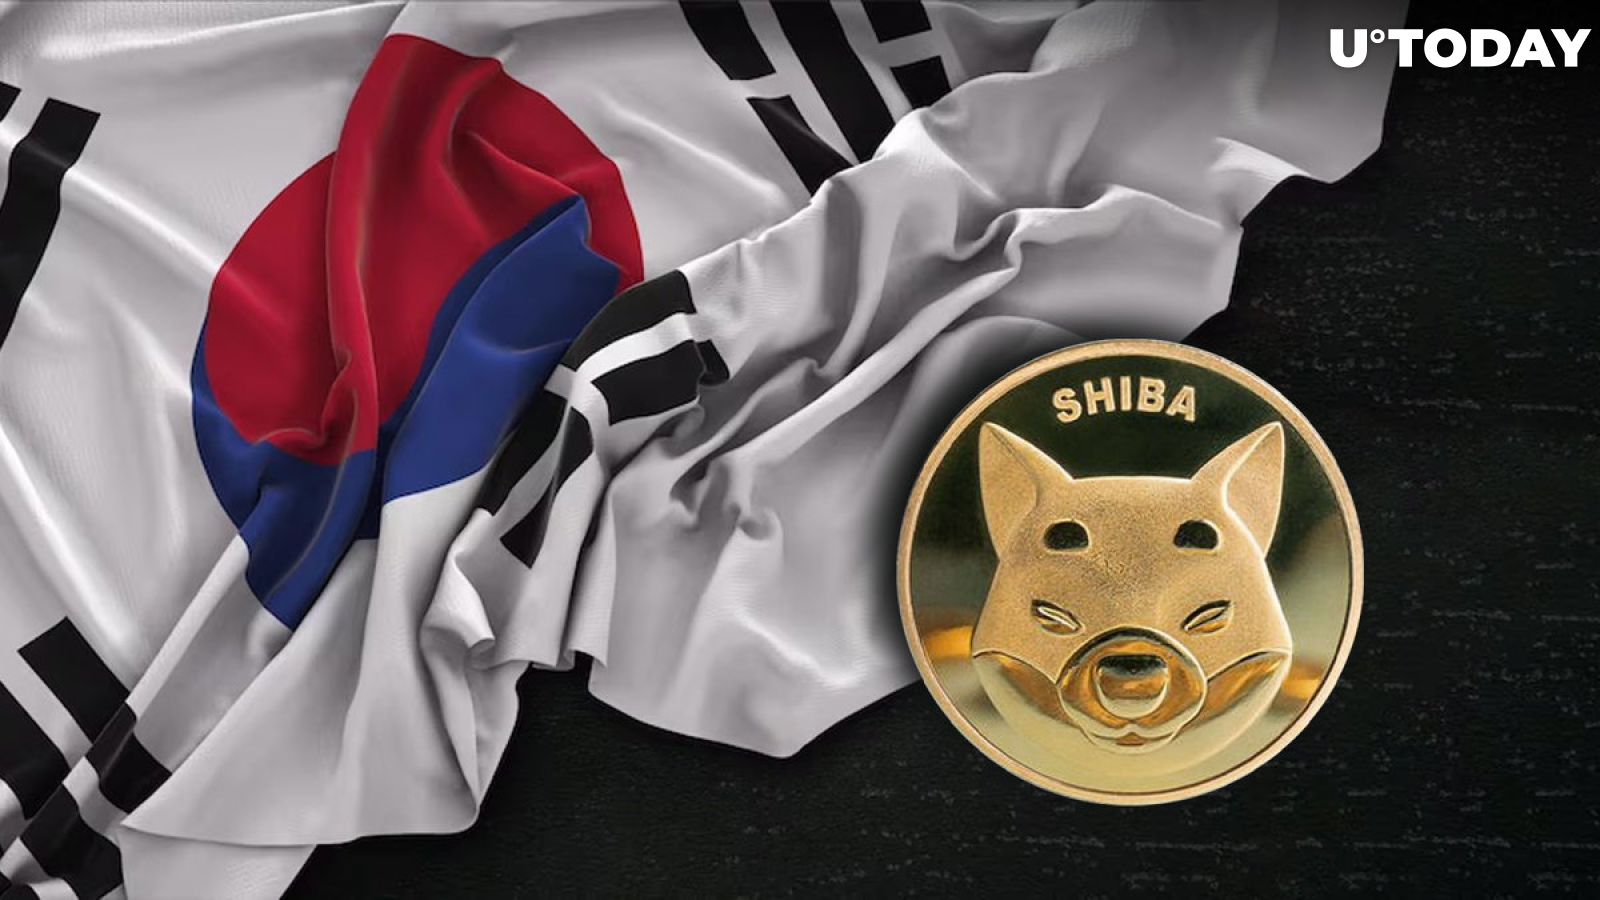 Shiba Inu (SHIB) Achieves New Listing Against Korean Won, Here's Why It's Good